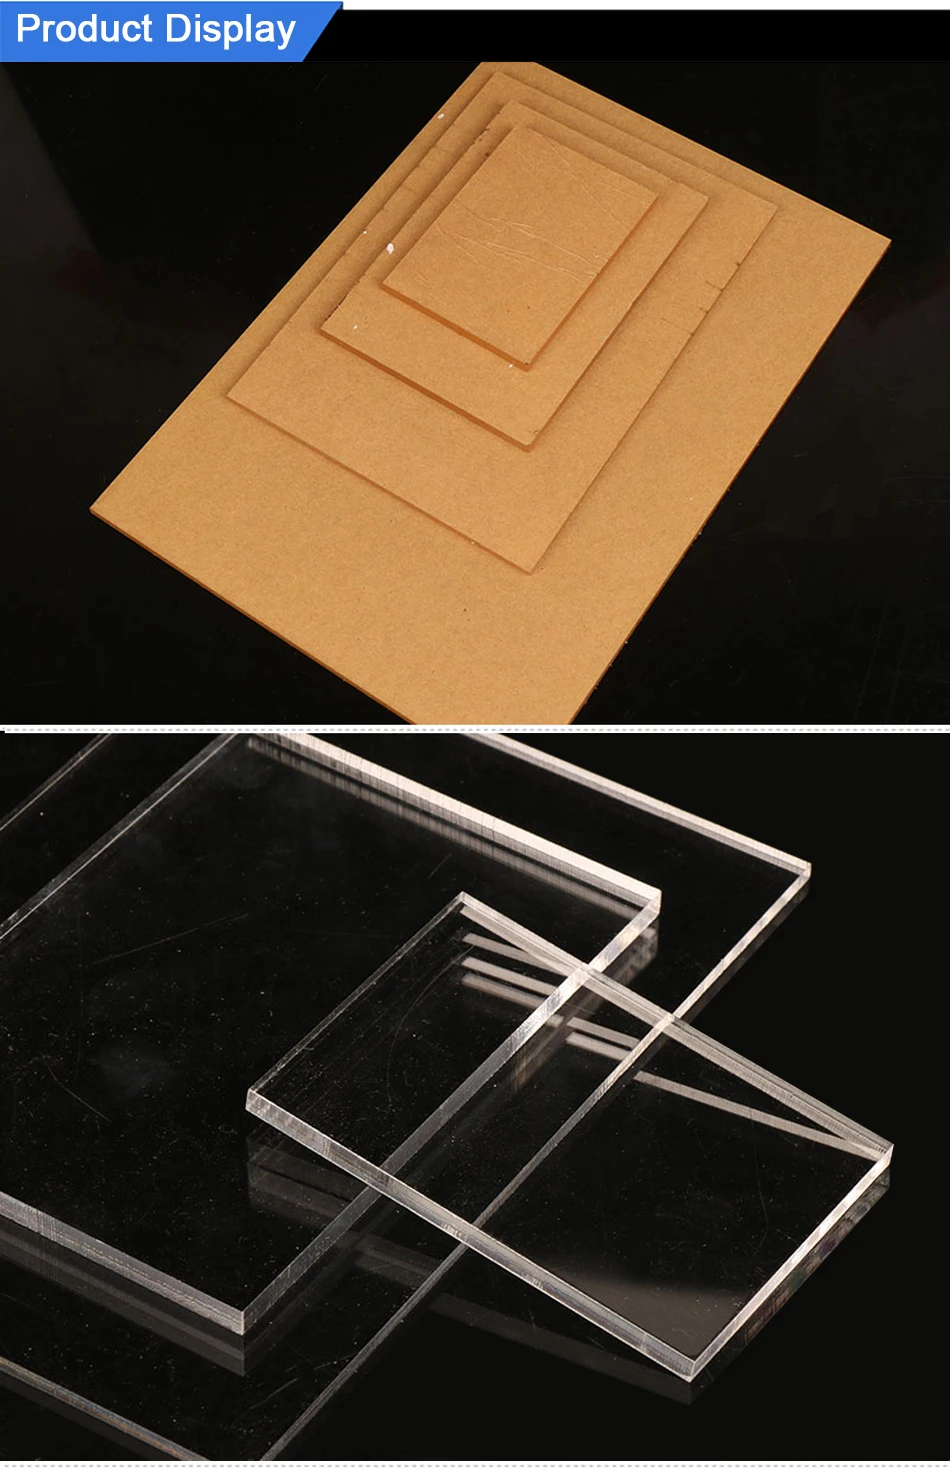 TUNGFULL A3 акриловые листы 1 мм прозрачный пластик для плексигласа лист пласт A4 A5 A6 A7 A8 нажимные пластины глиняный инструмент